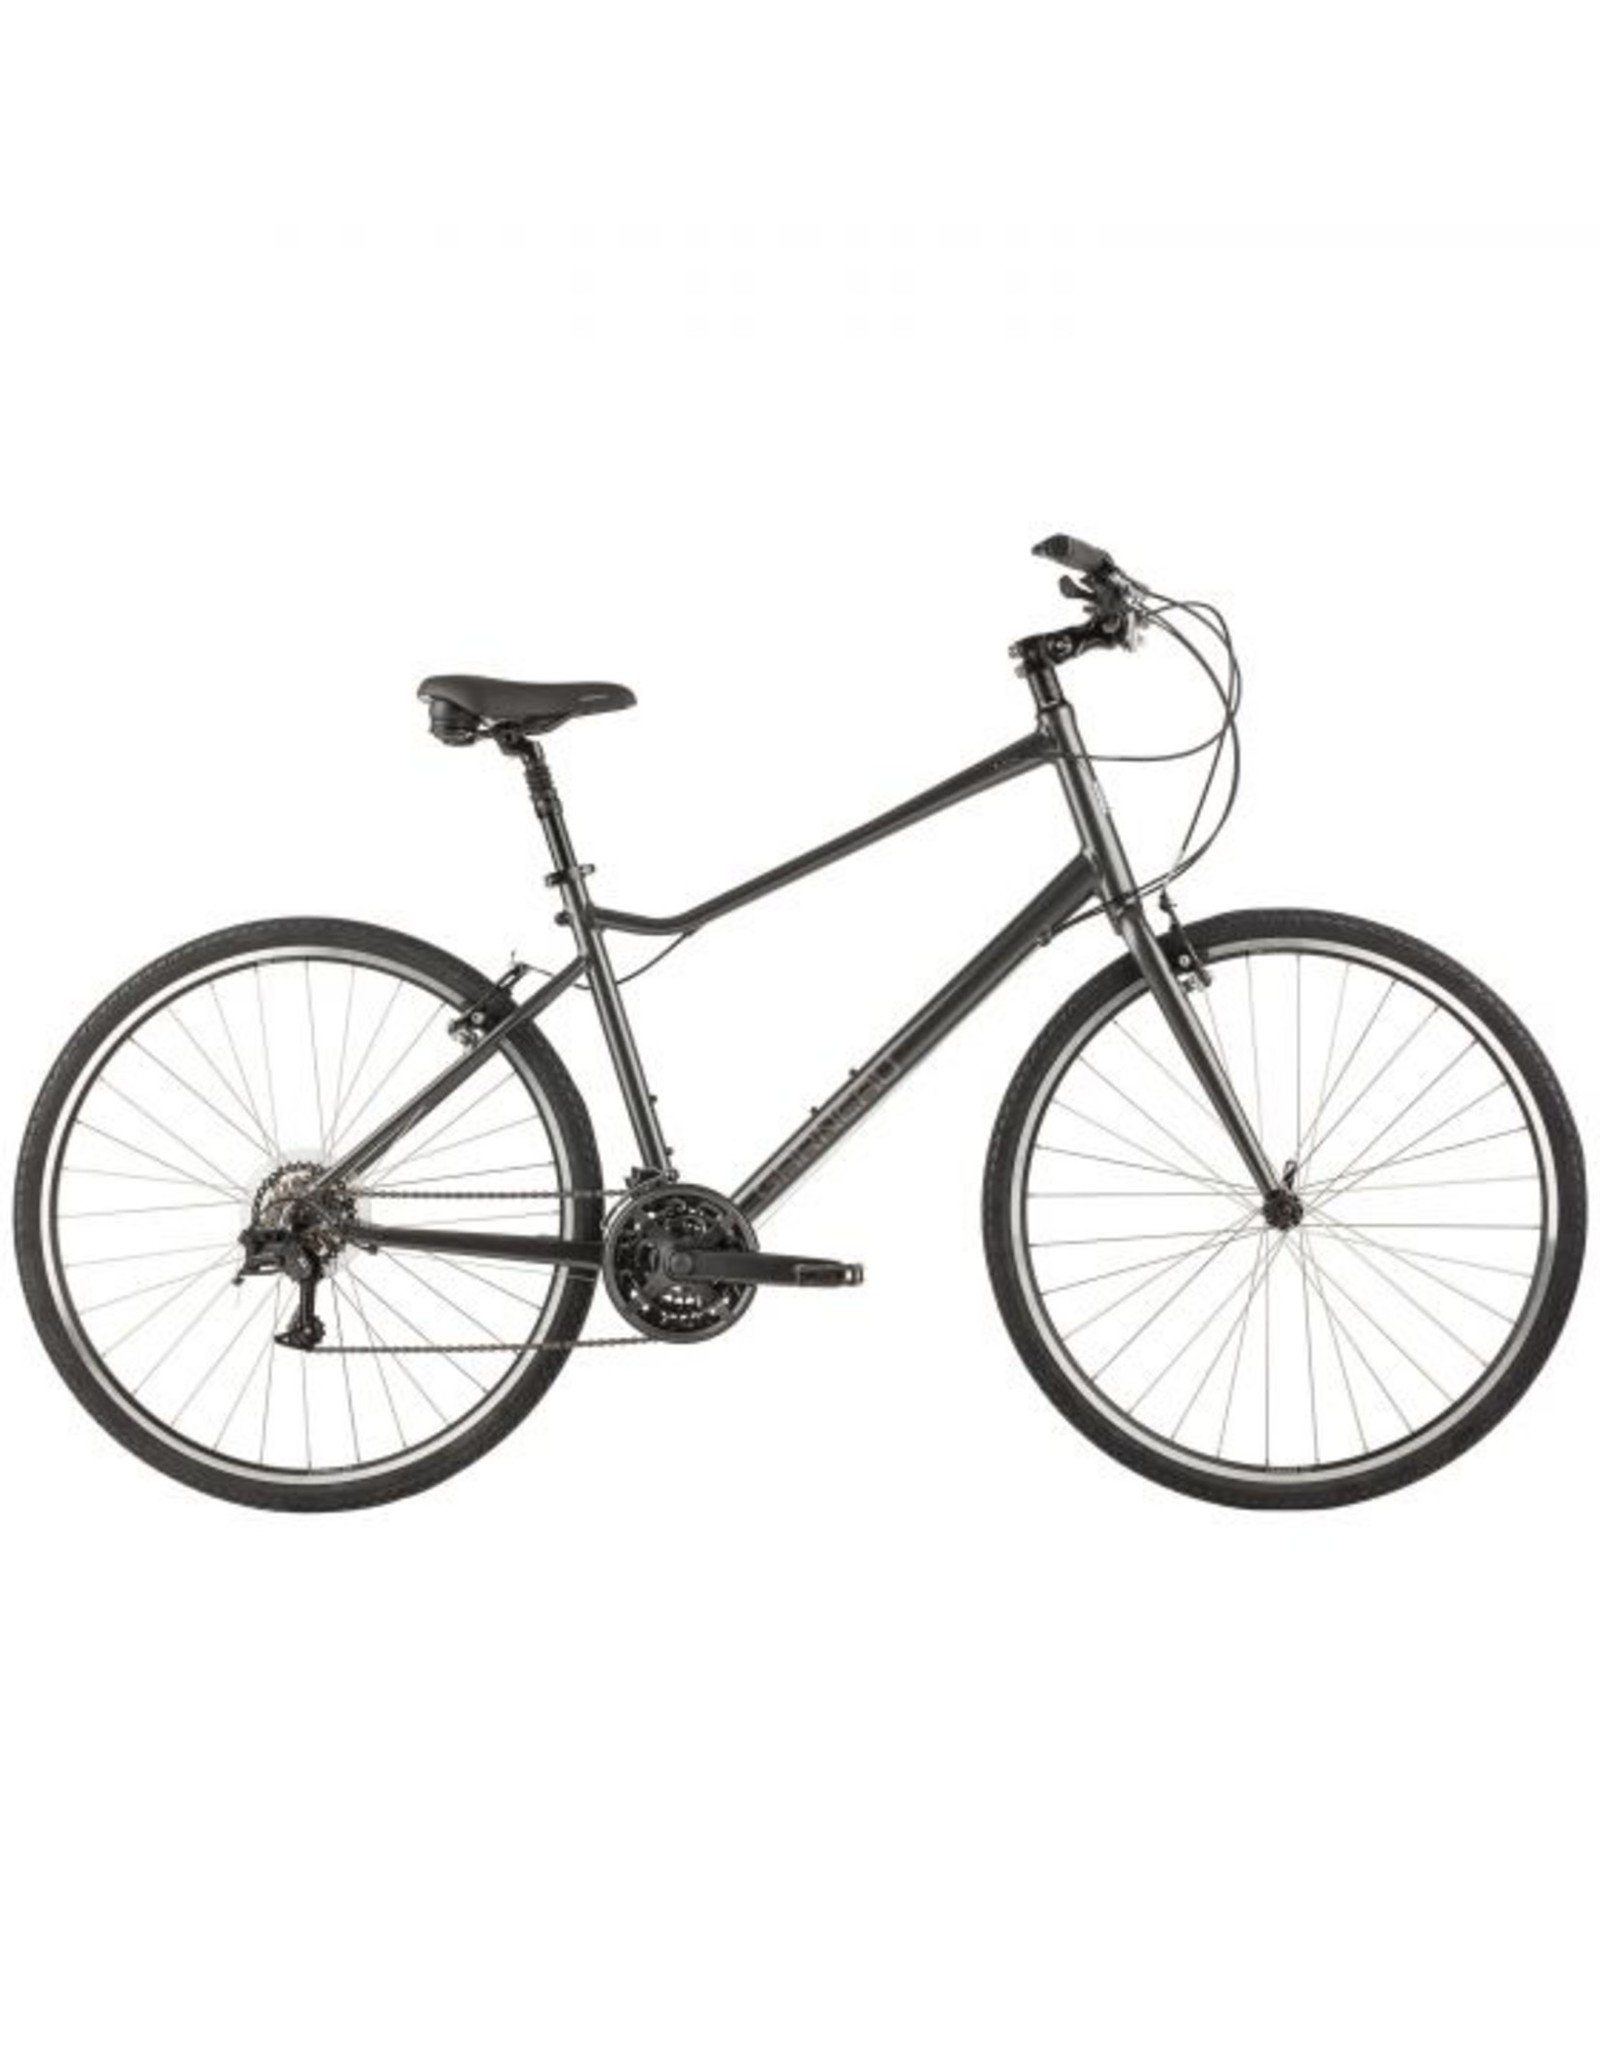 Garneau Vélo Hybride - Espace Gris Chaud (2021)